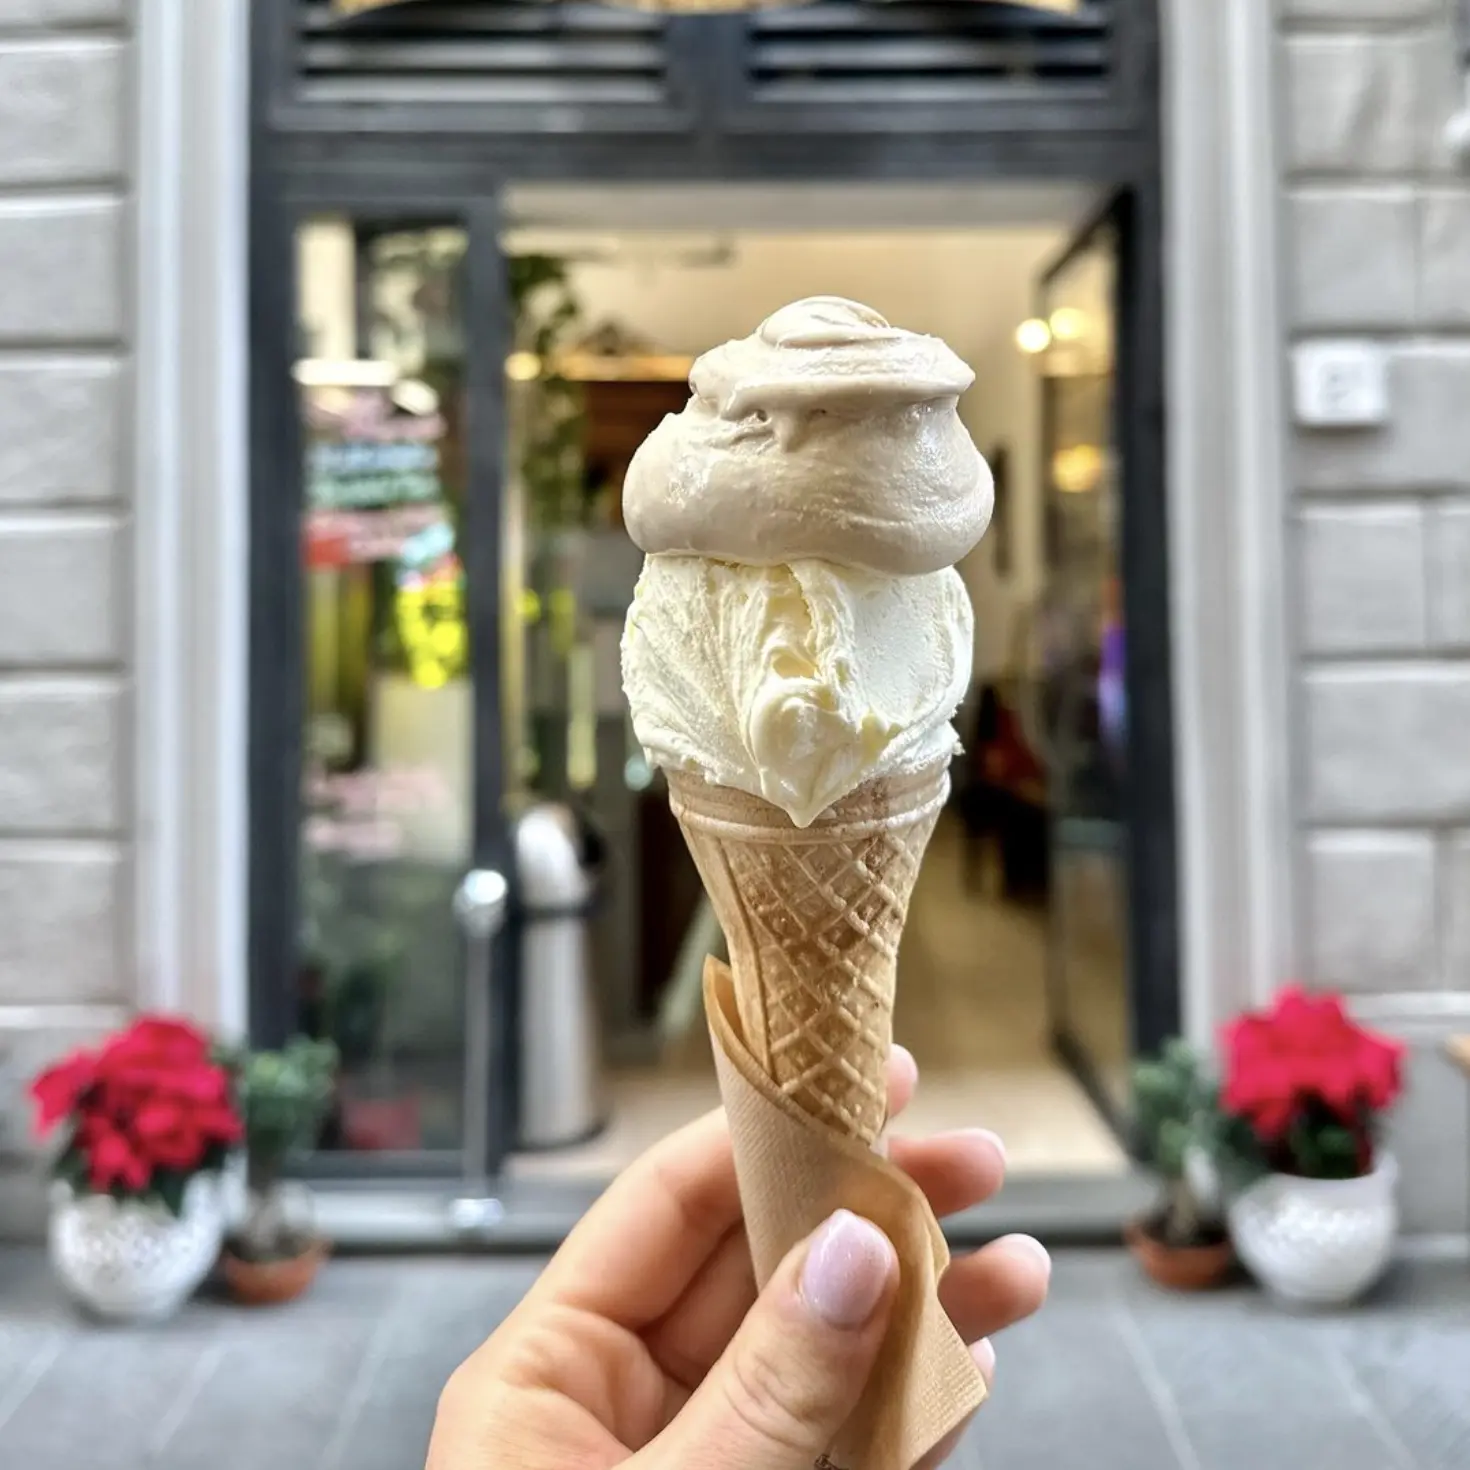 Gluten-free gelato from Antica Gelateria Fiorentina in Florence, Italy